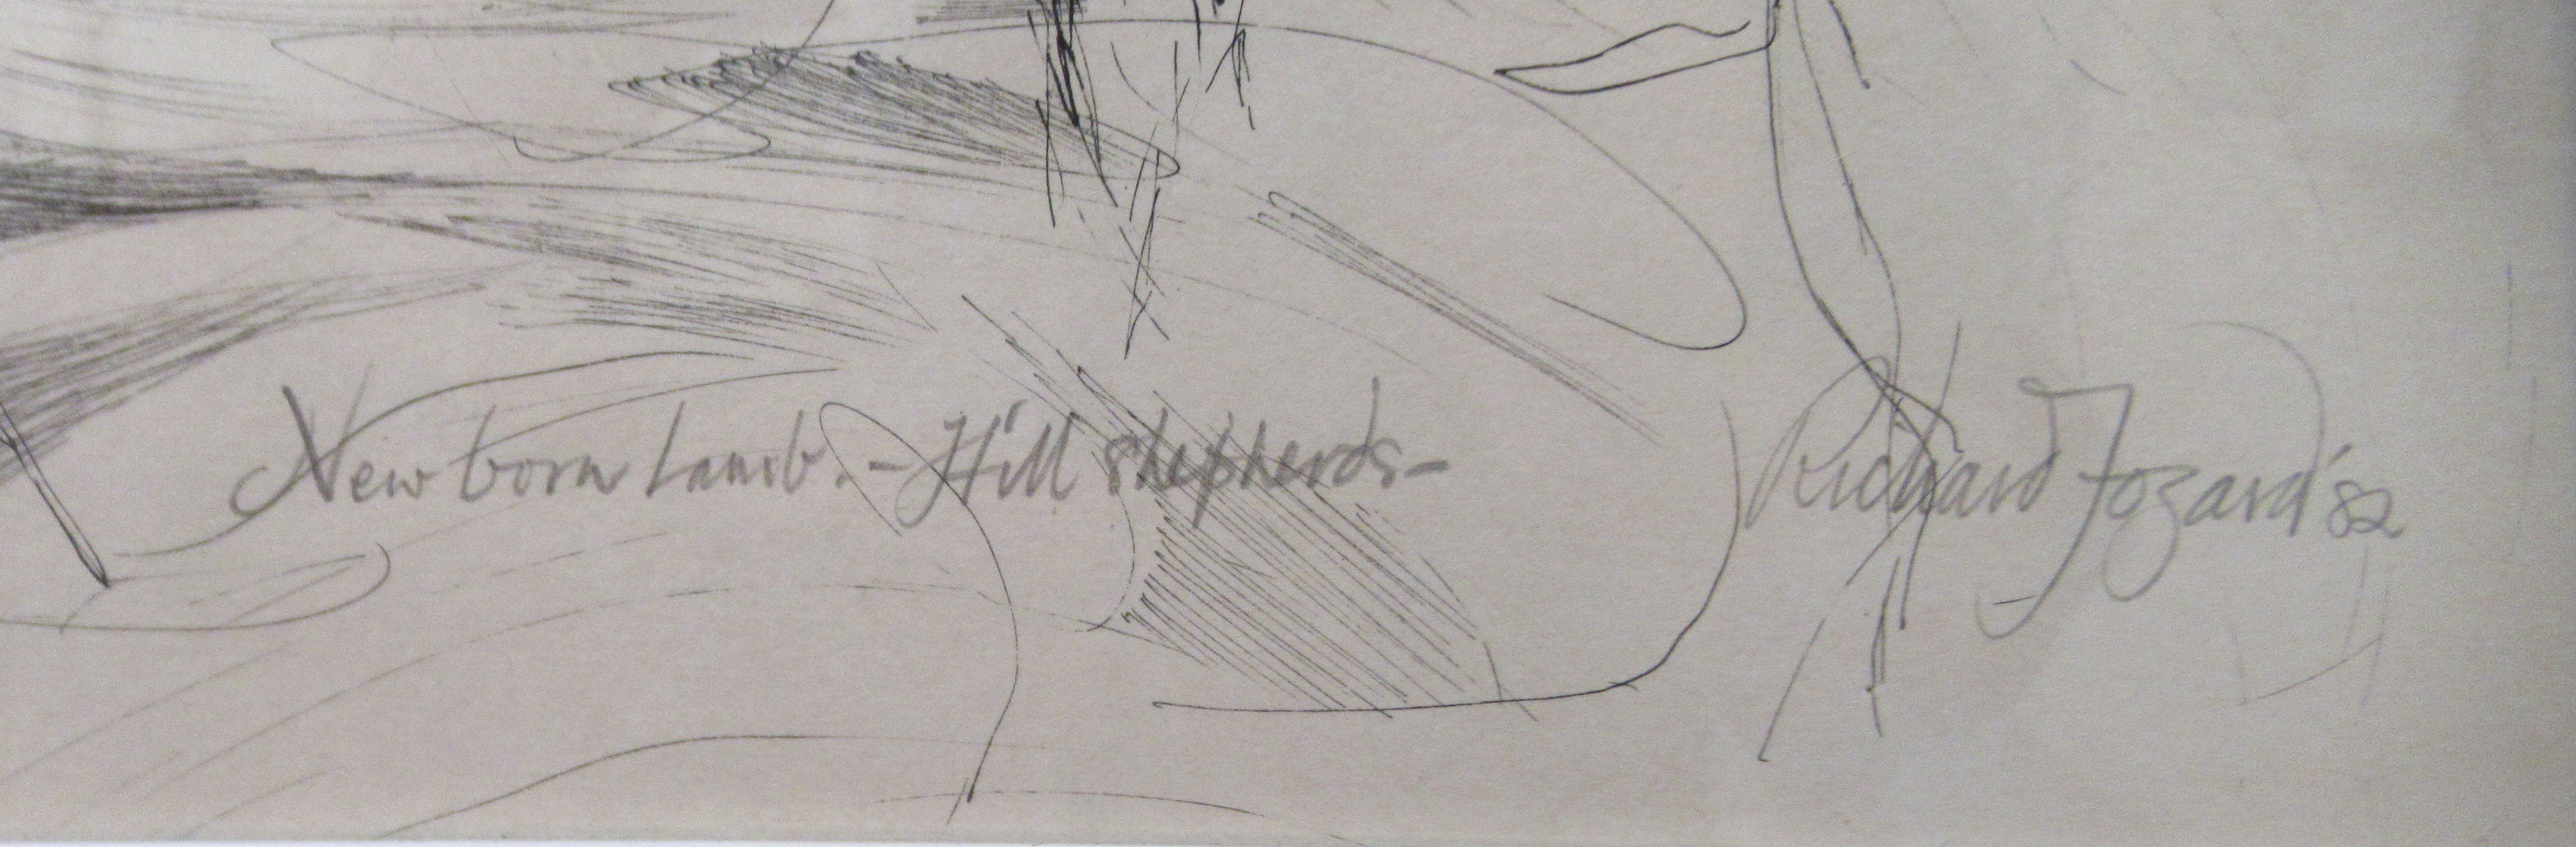 Richard Mozart - 'New born lamb - Hill Shepherds'  pen & ink  bears a pencil inscription, - Image 2 of 2